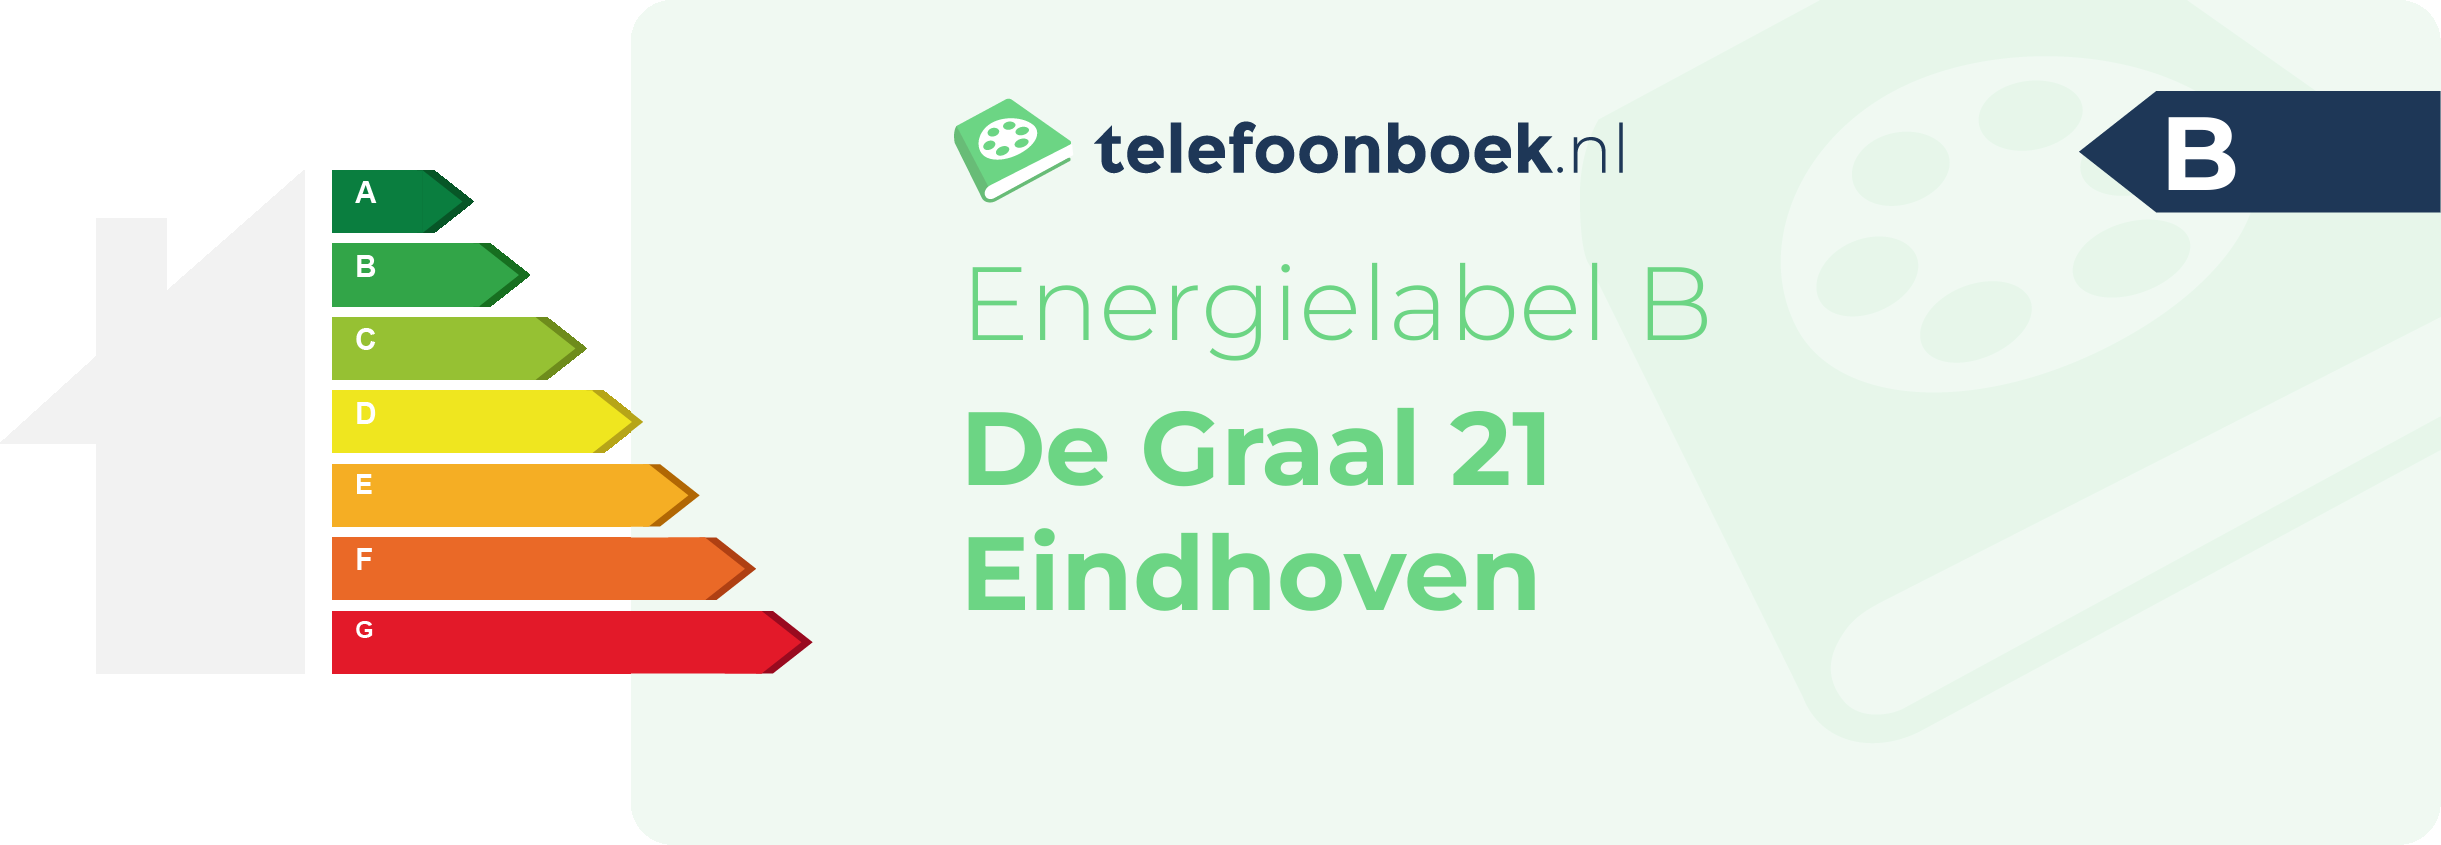 Energielabel De Graal 21 Eindhoven